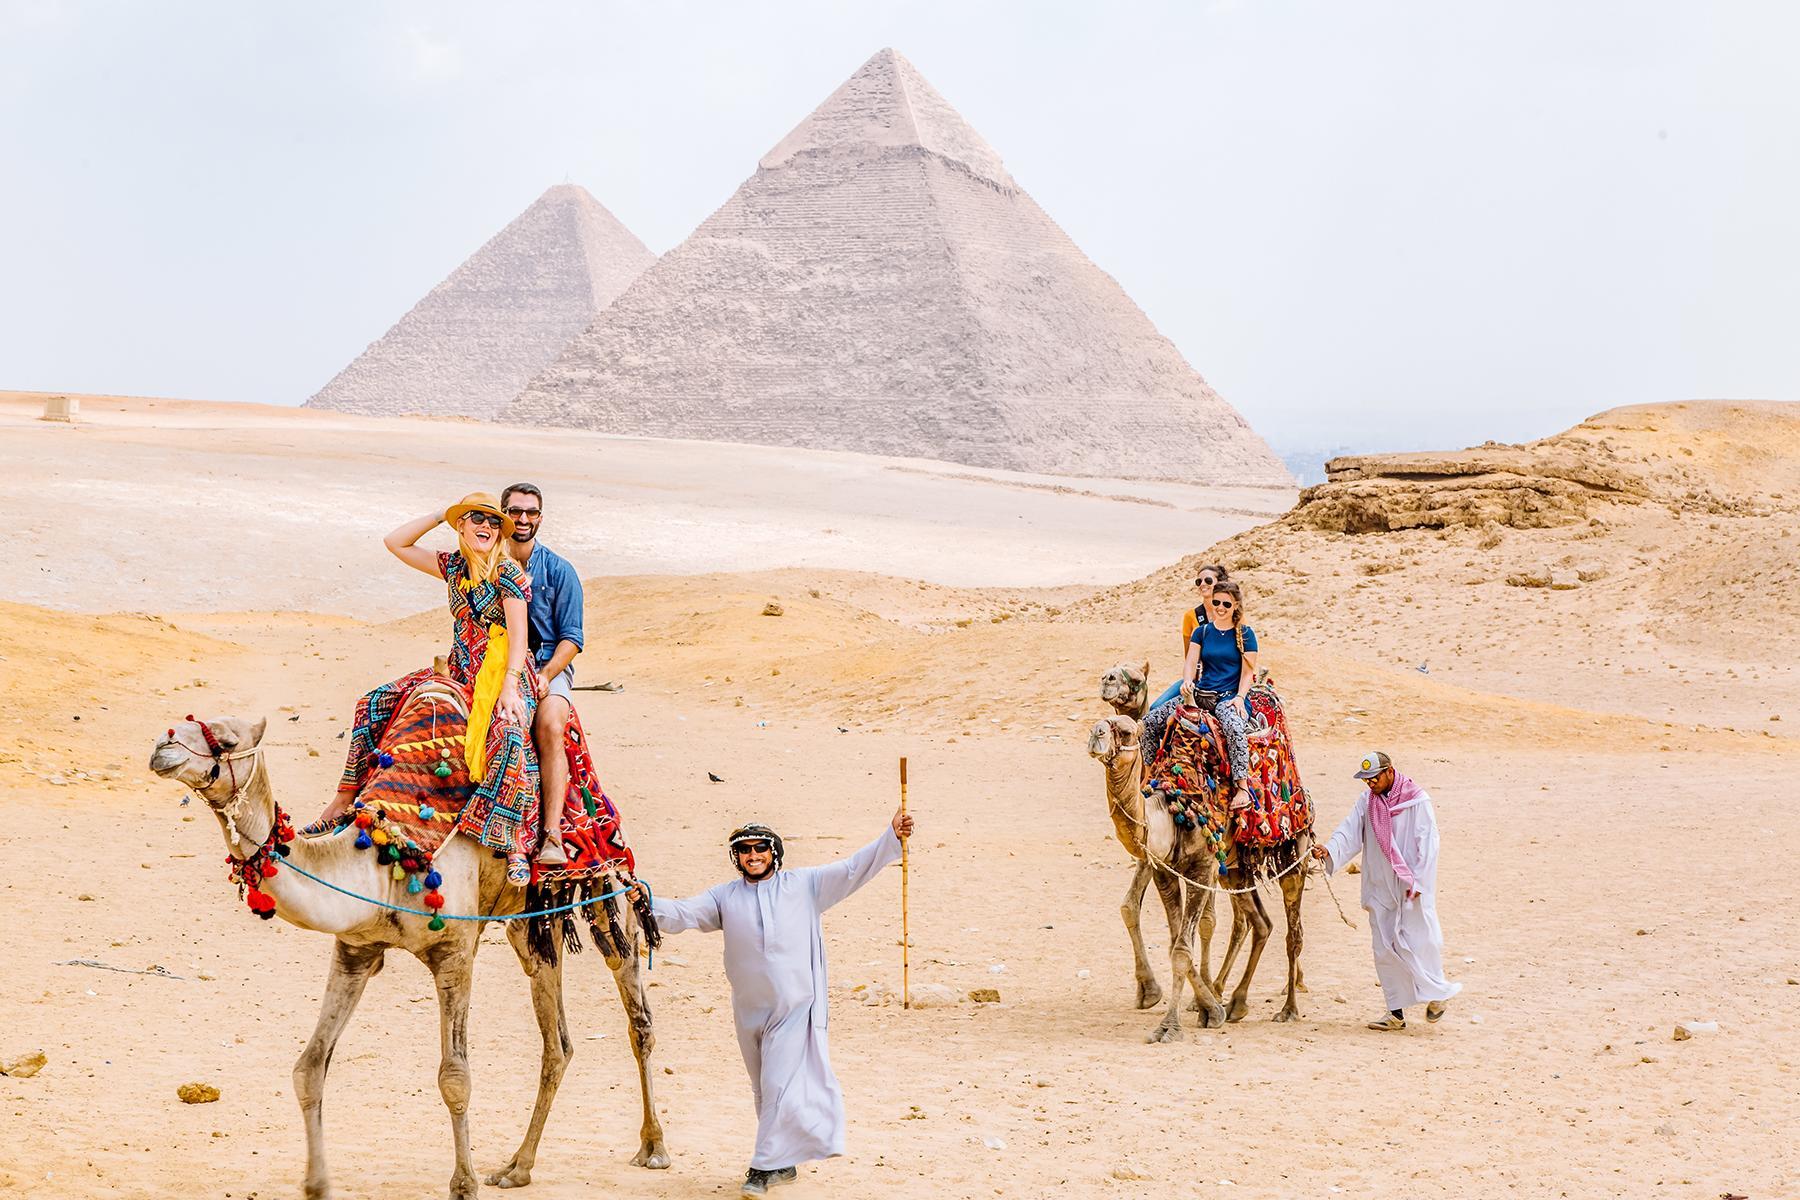 travel agencies to go to egypt